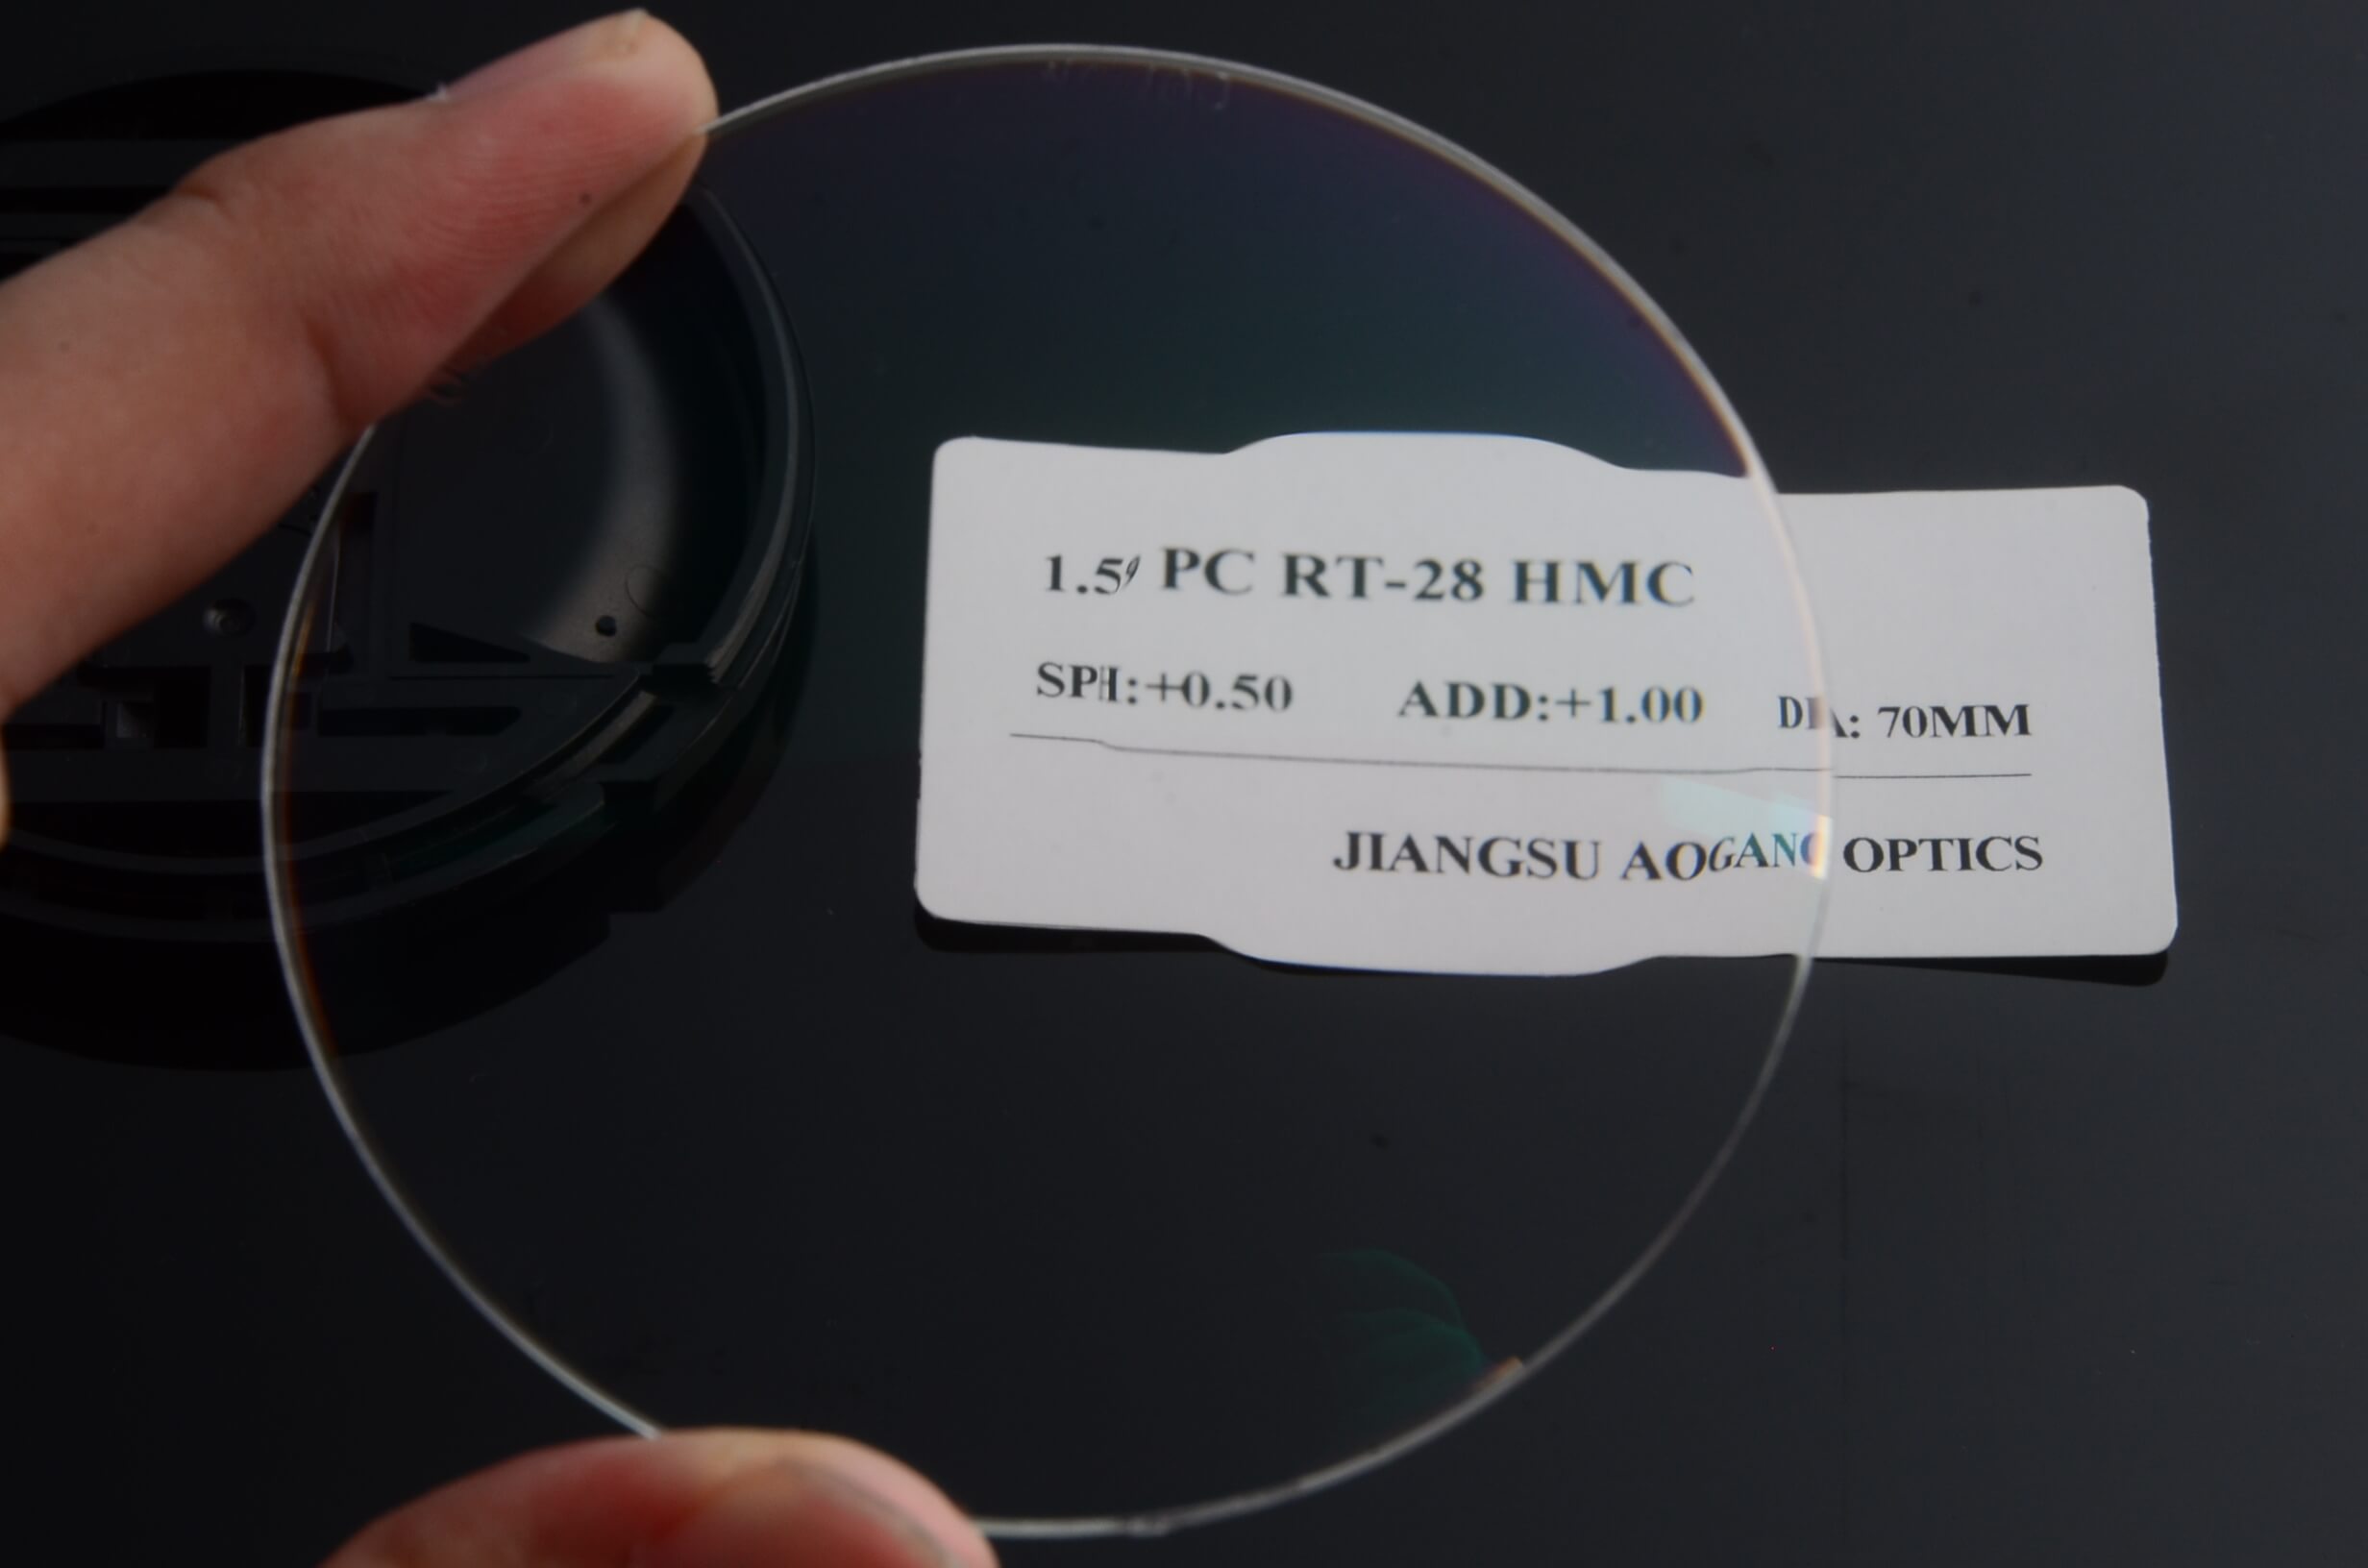 1.59 Polycarbonate RT-28 Bifocal Lenses